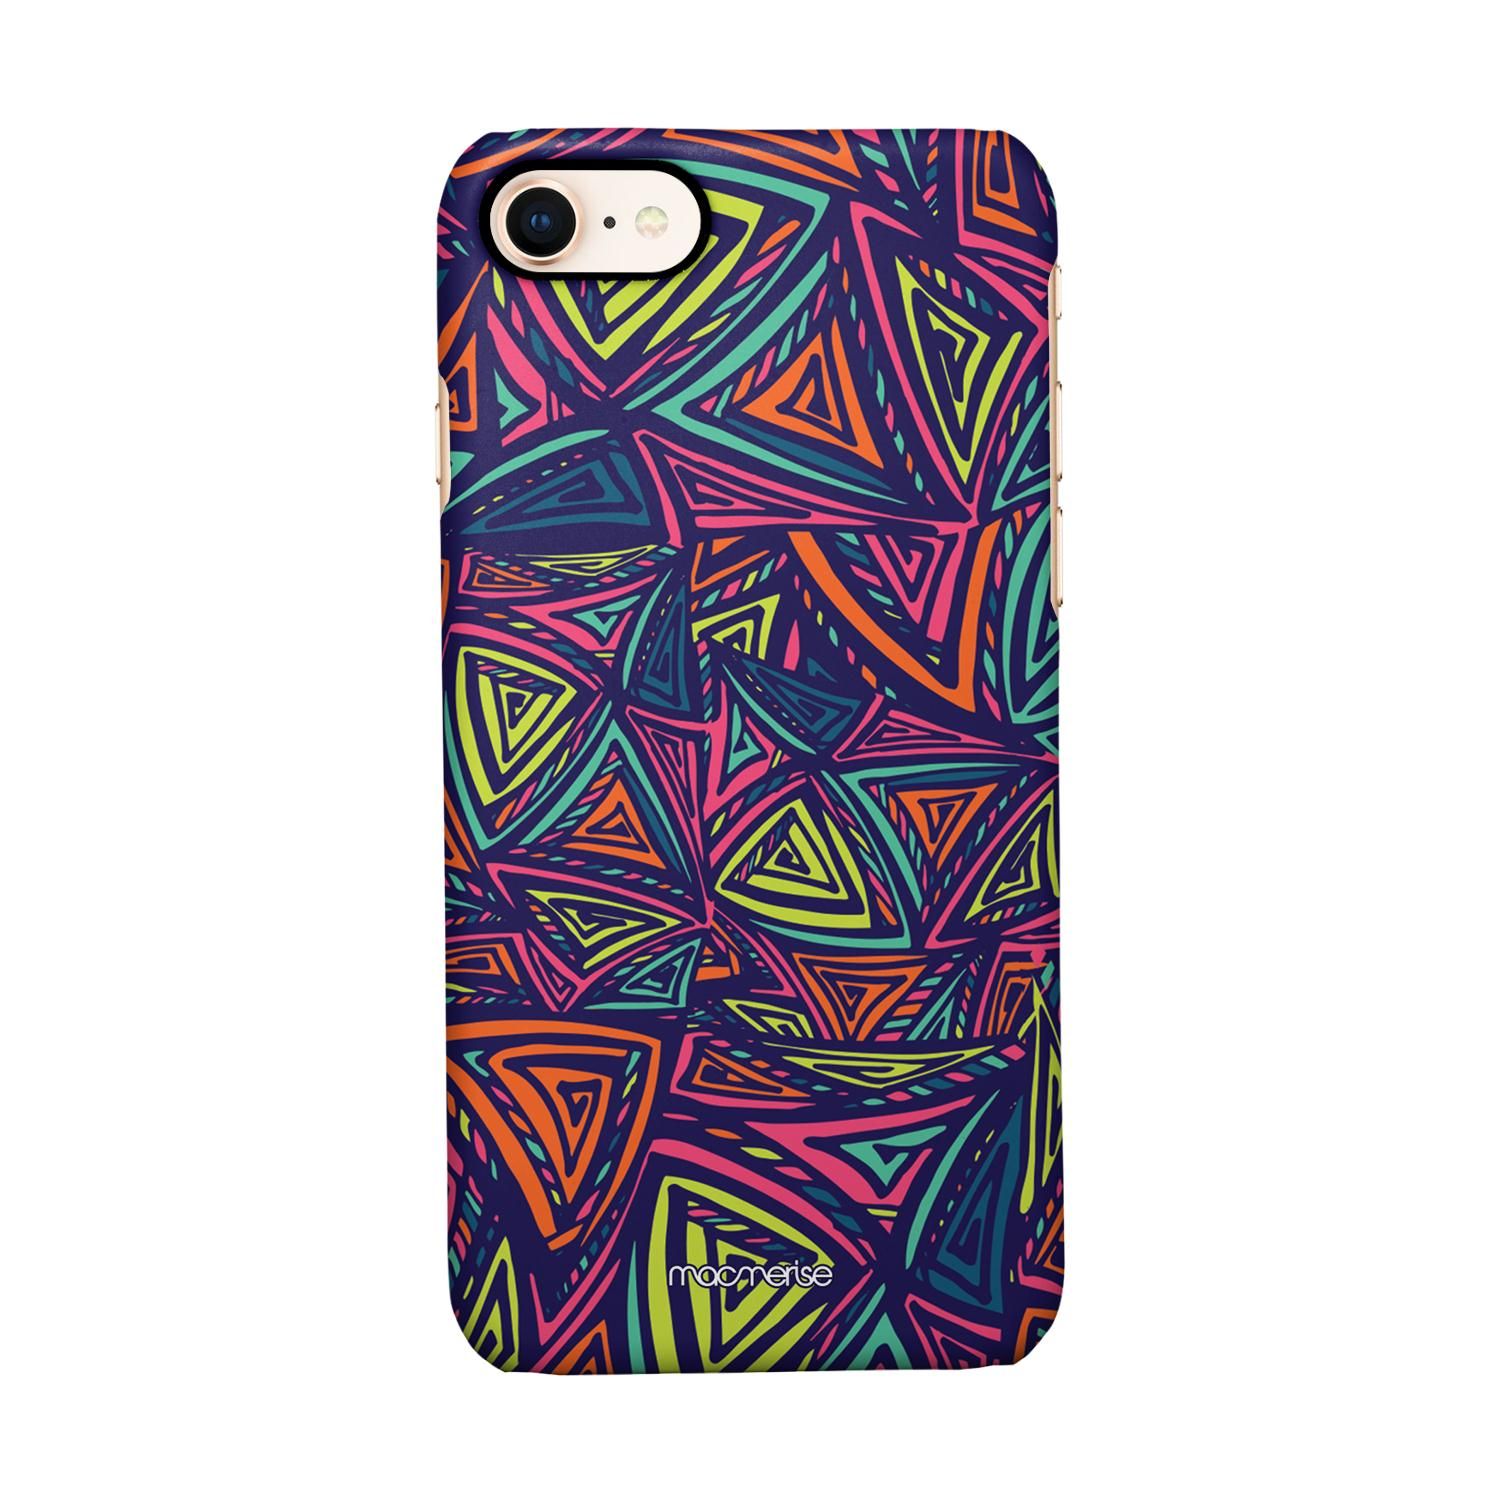 Buy Neon Angles - Sleek Phone Case for iPhone 7 Online